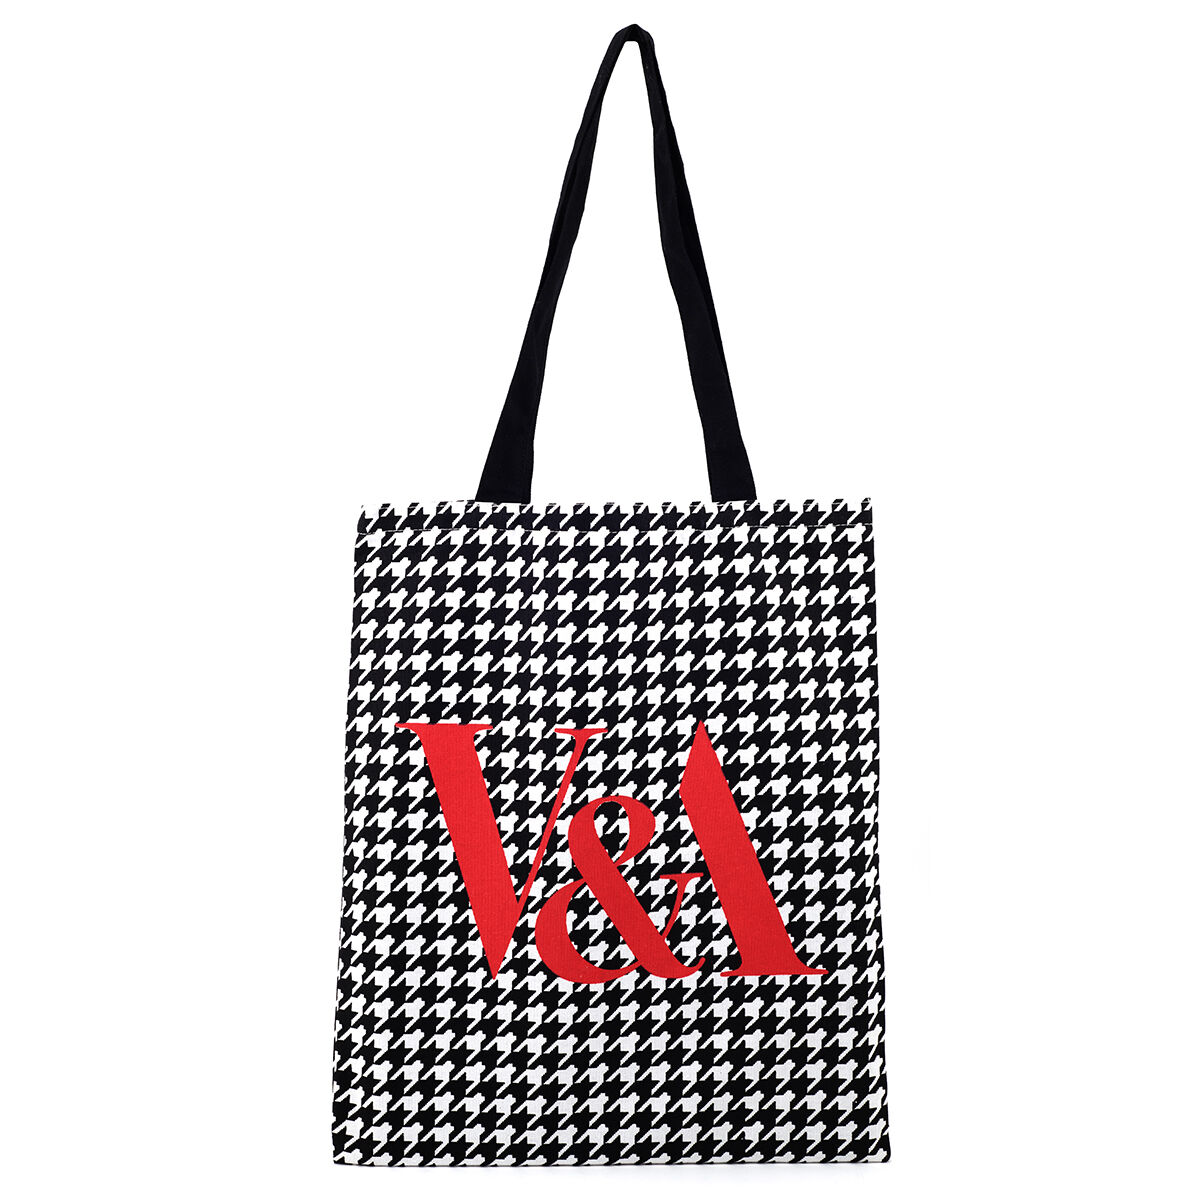 Designer Tote Bags, Handbags, Purses & Backpacks | V&A Shop